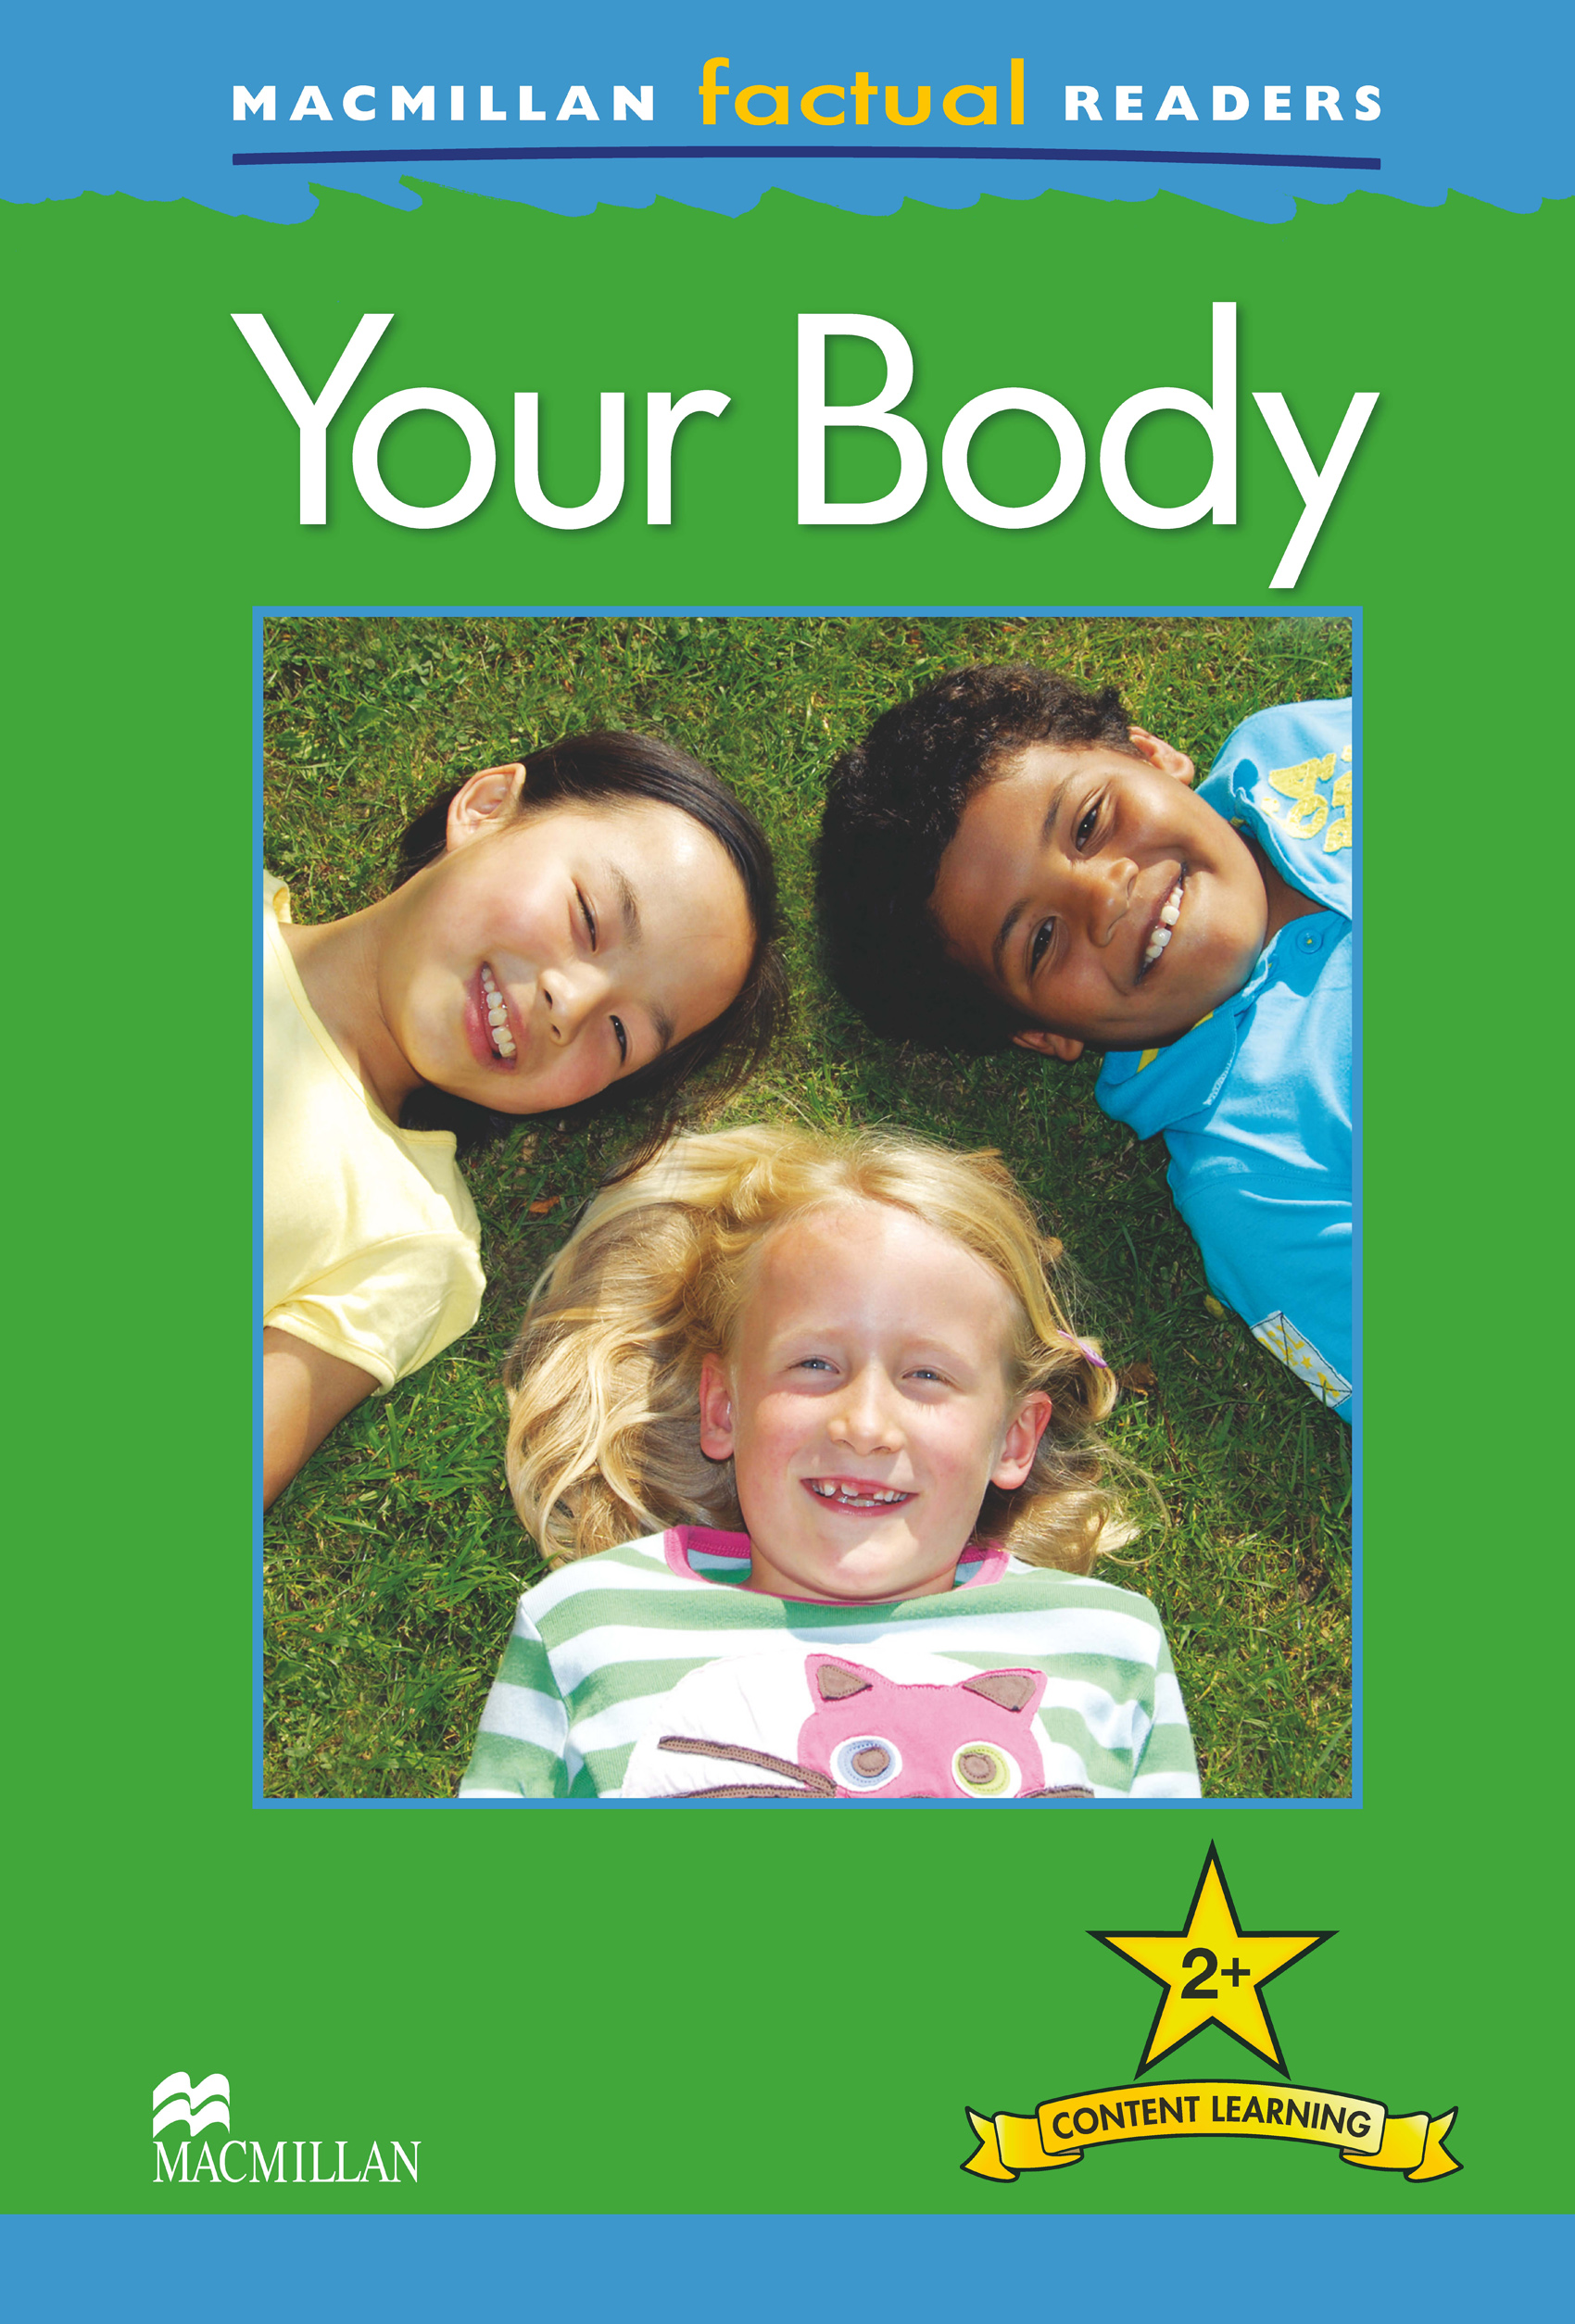 Macmillan Factual Readers: Your Body